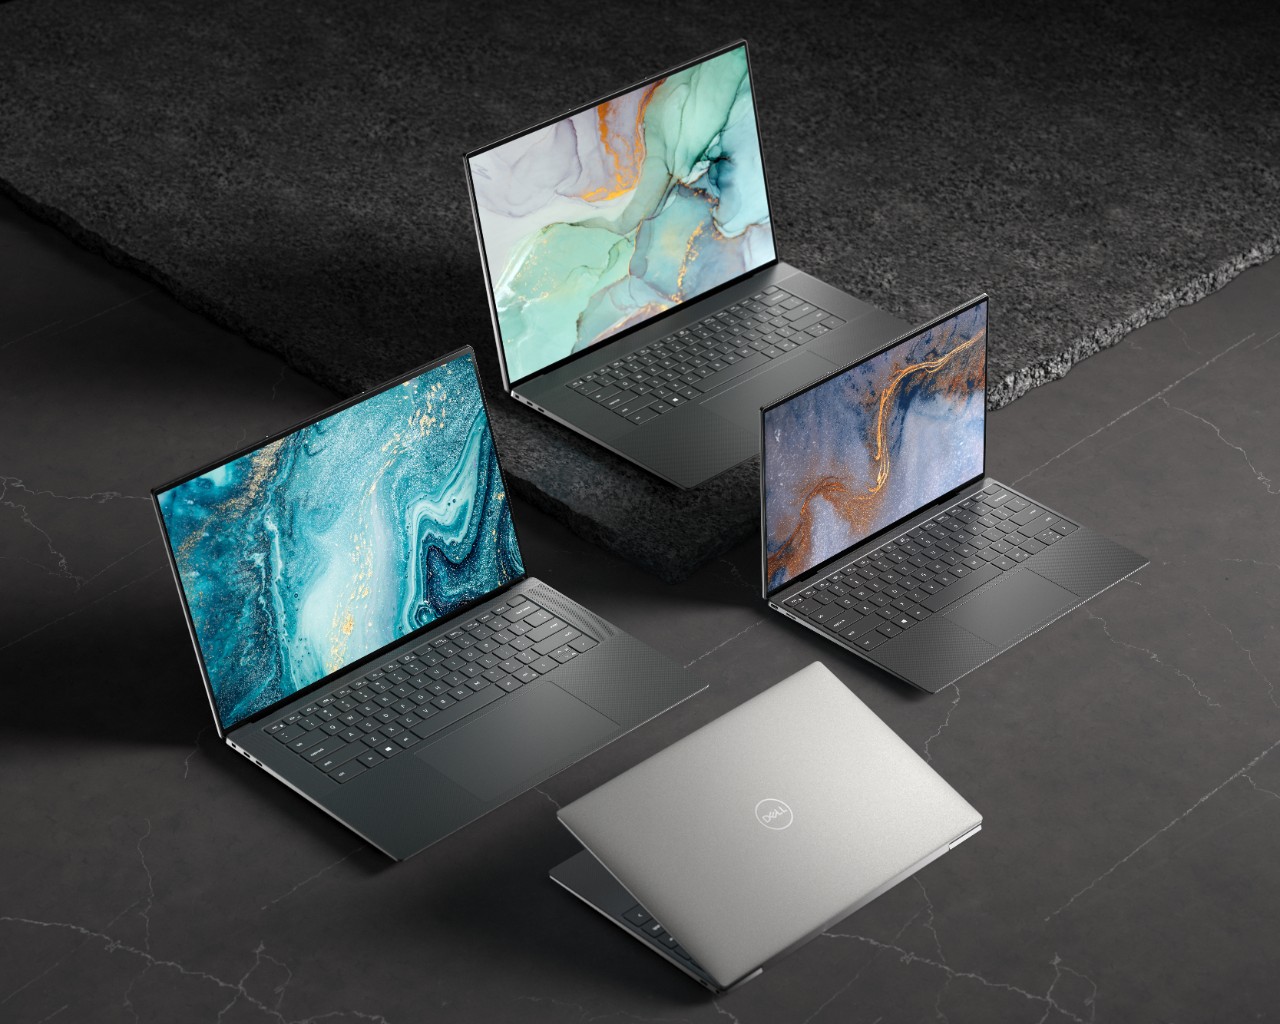 XPS 13” 15” & 17” Laptop Family